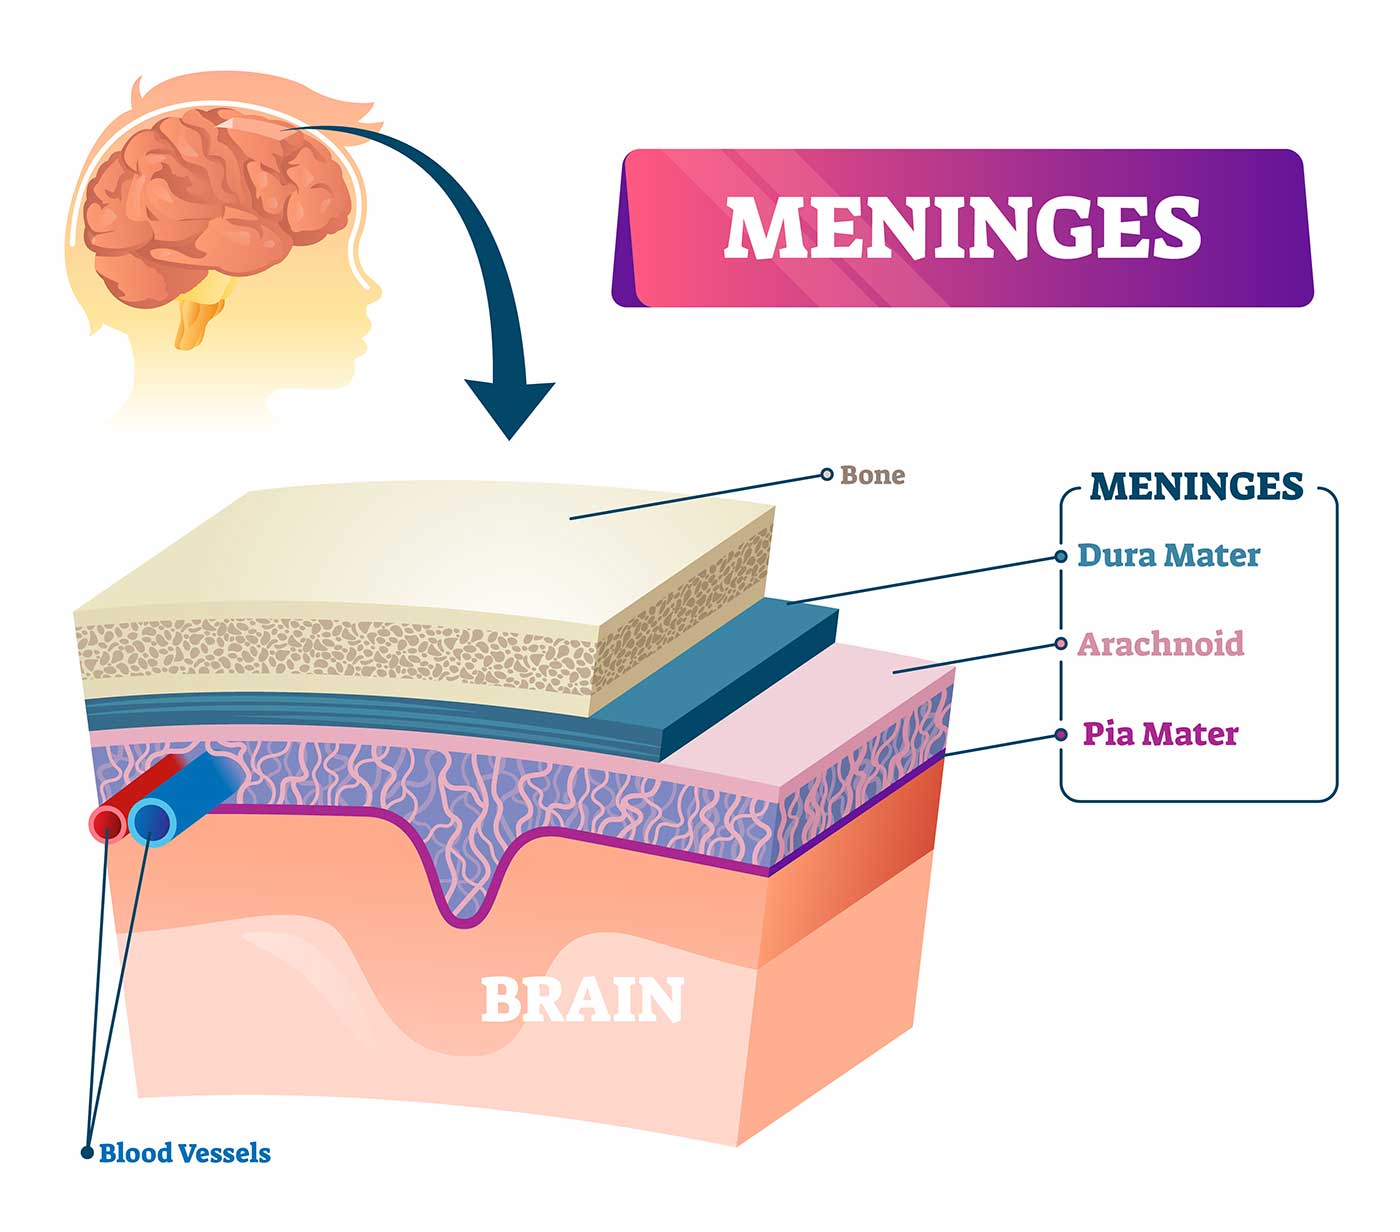 three meningeal layers: pia mater, arachnoid mater, and dura mater